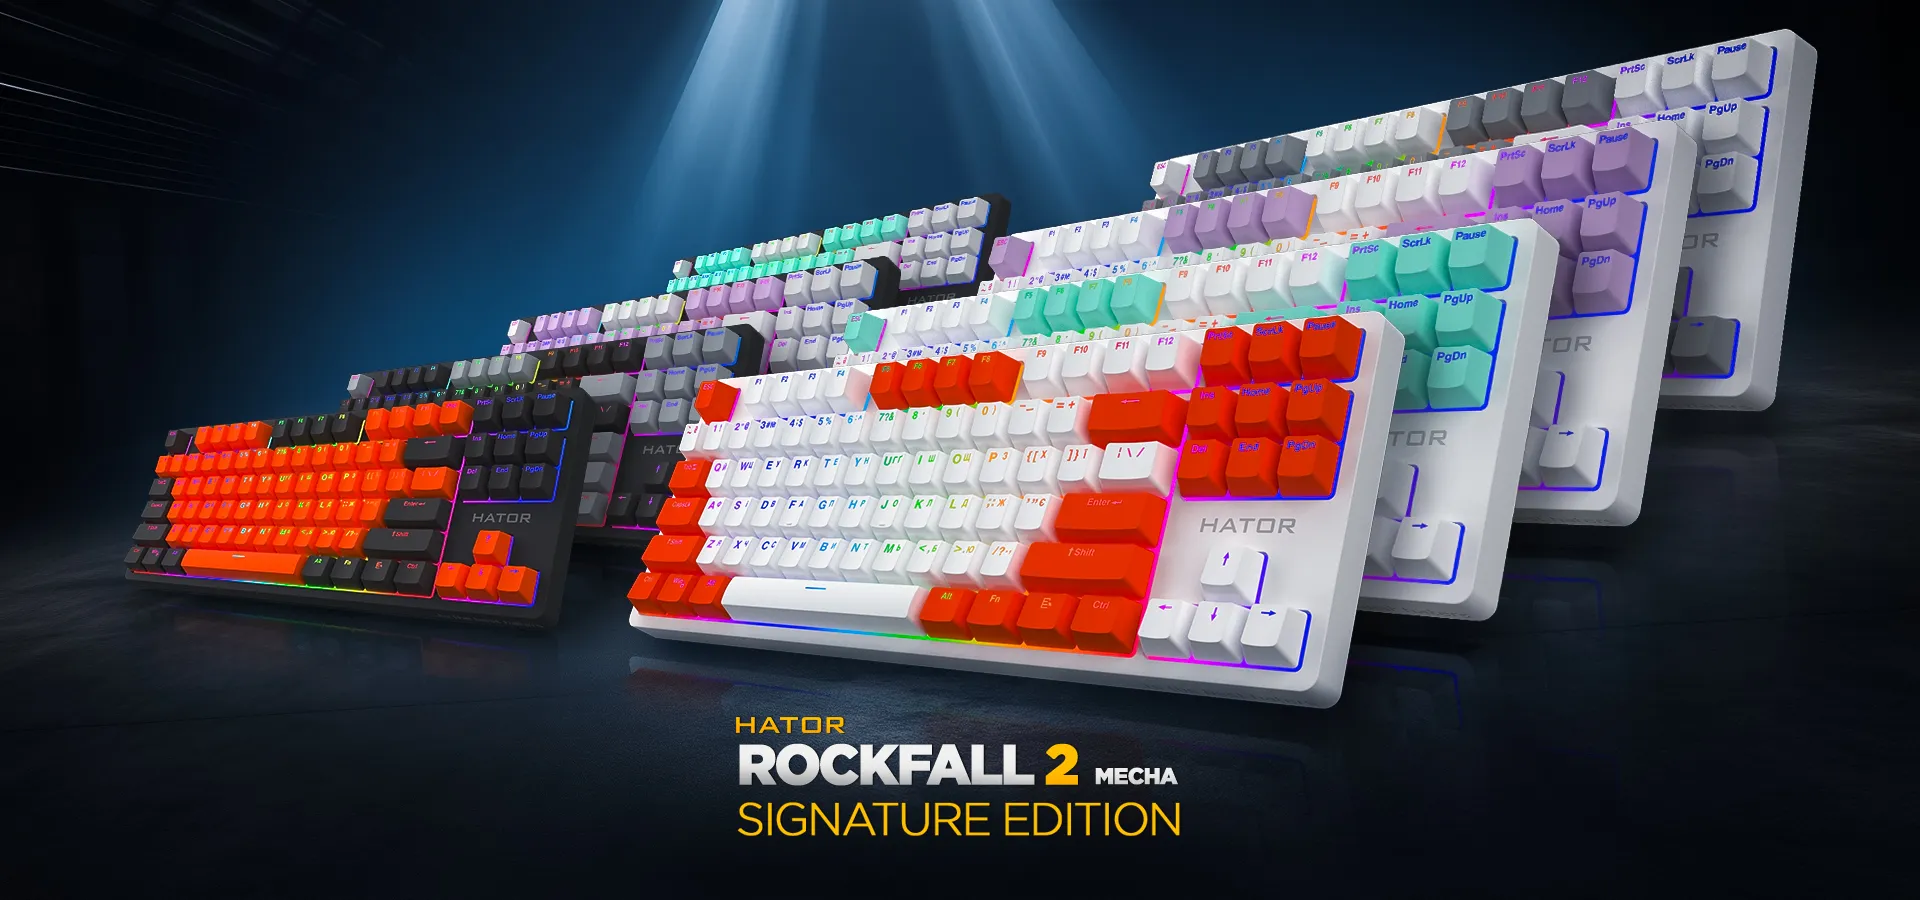 HATOR Rockfall 2 Mecha Signature Edition